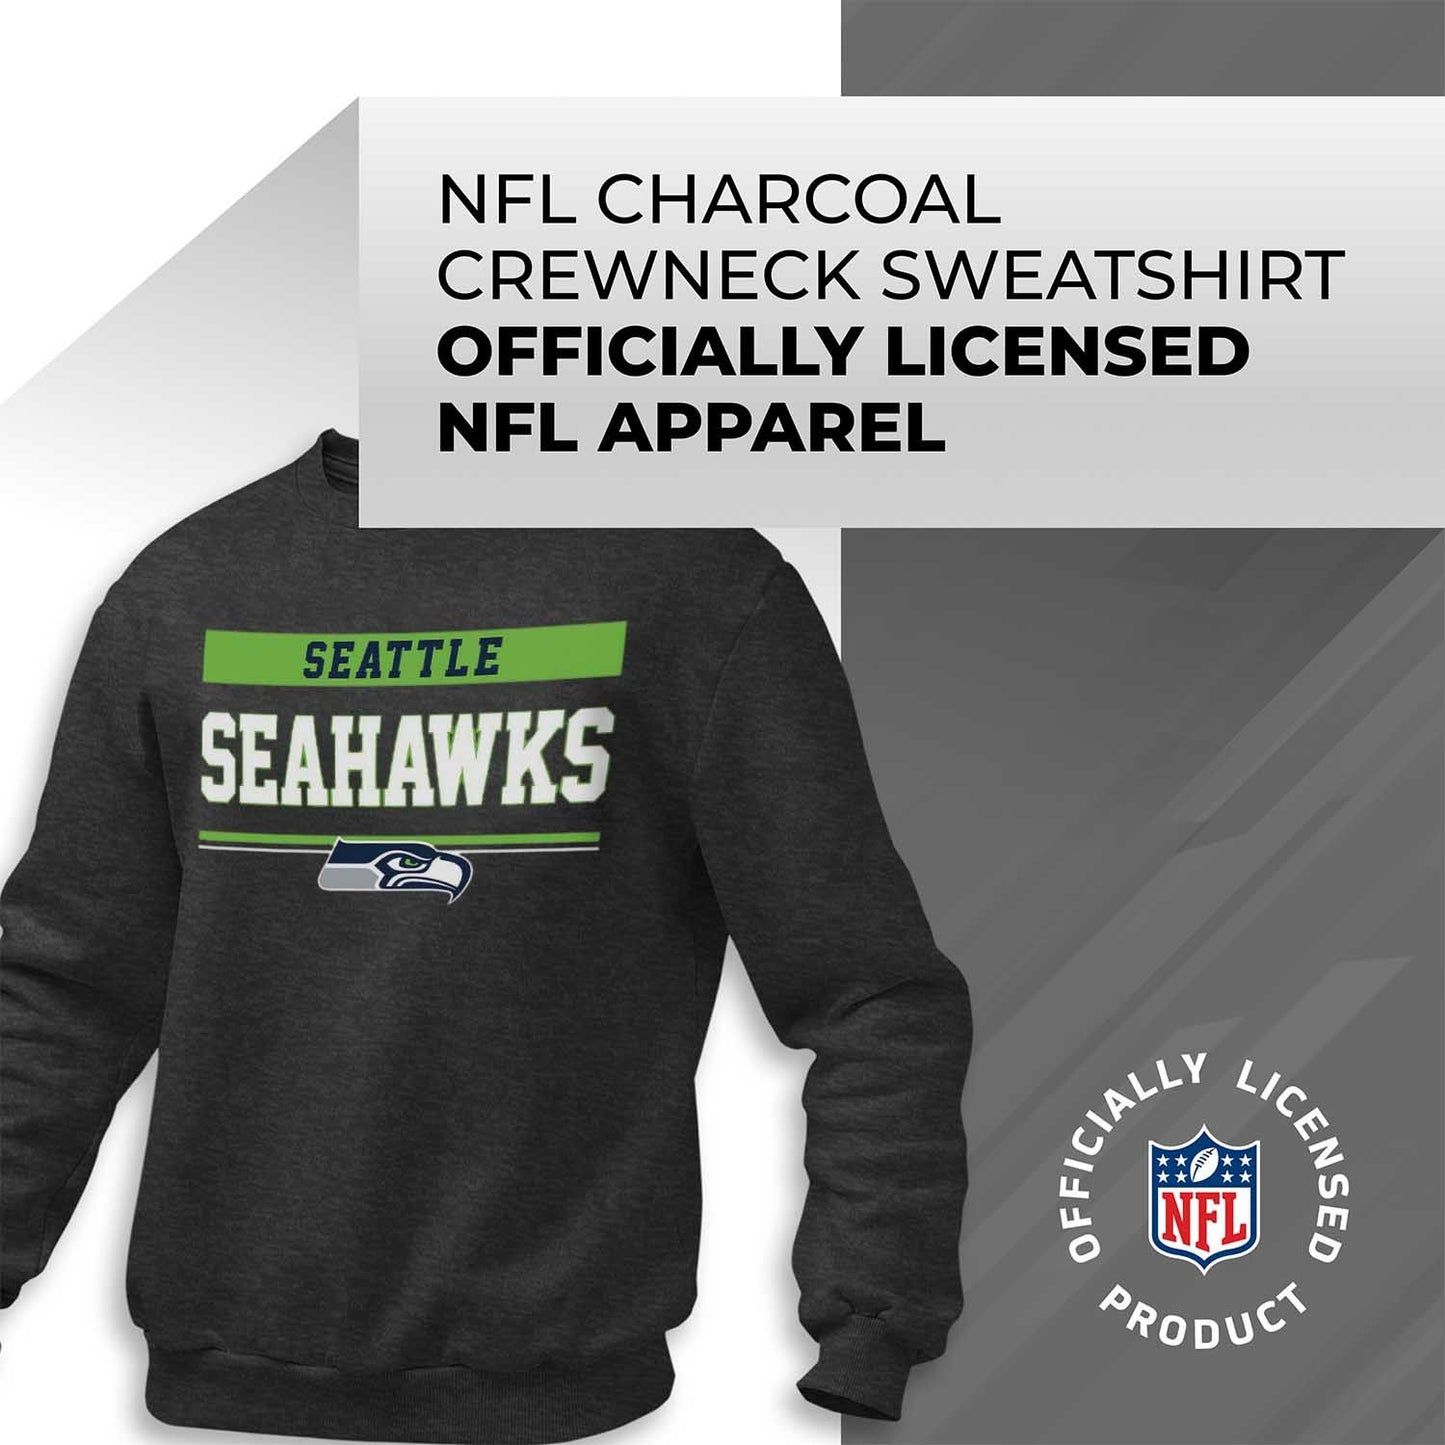 Seattle Seahawks NFL Adult Long Sleeve Team Block Charcoal Crewneck Sweatshirt - Charcoal